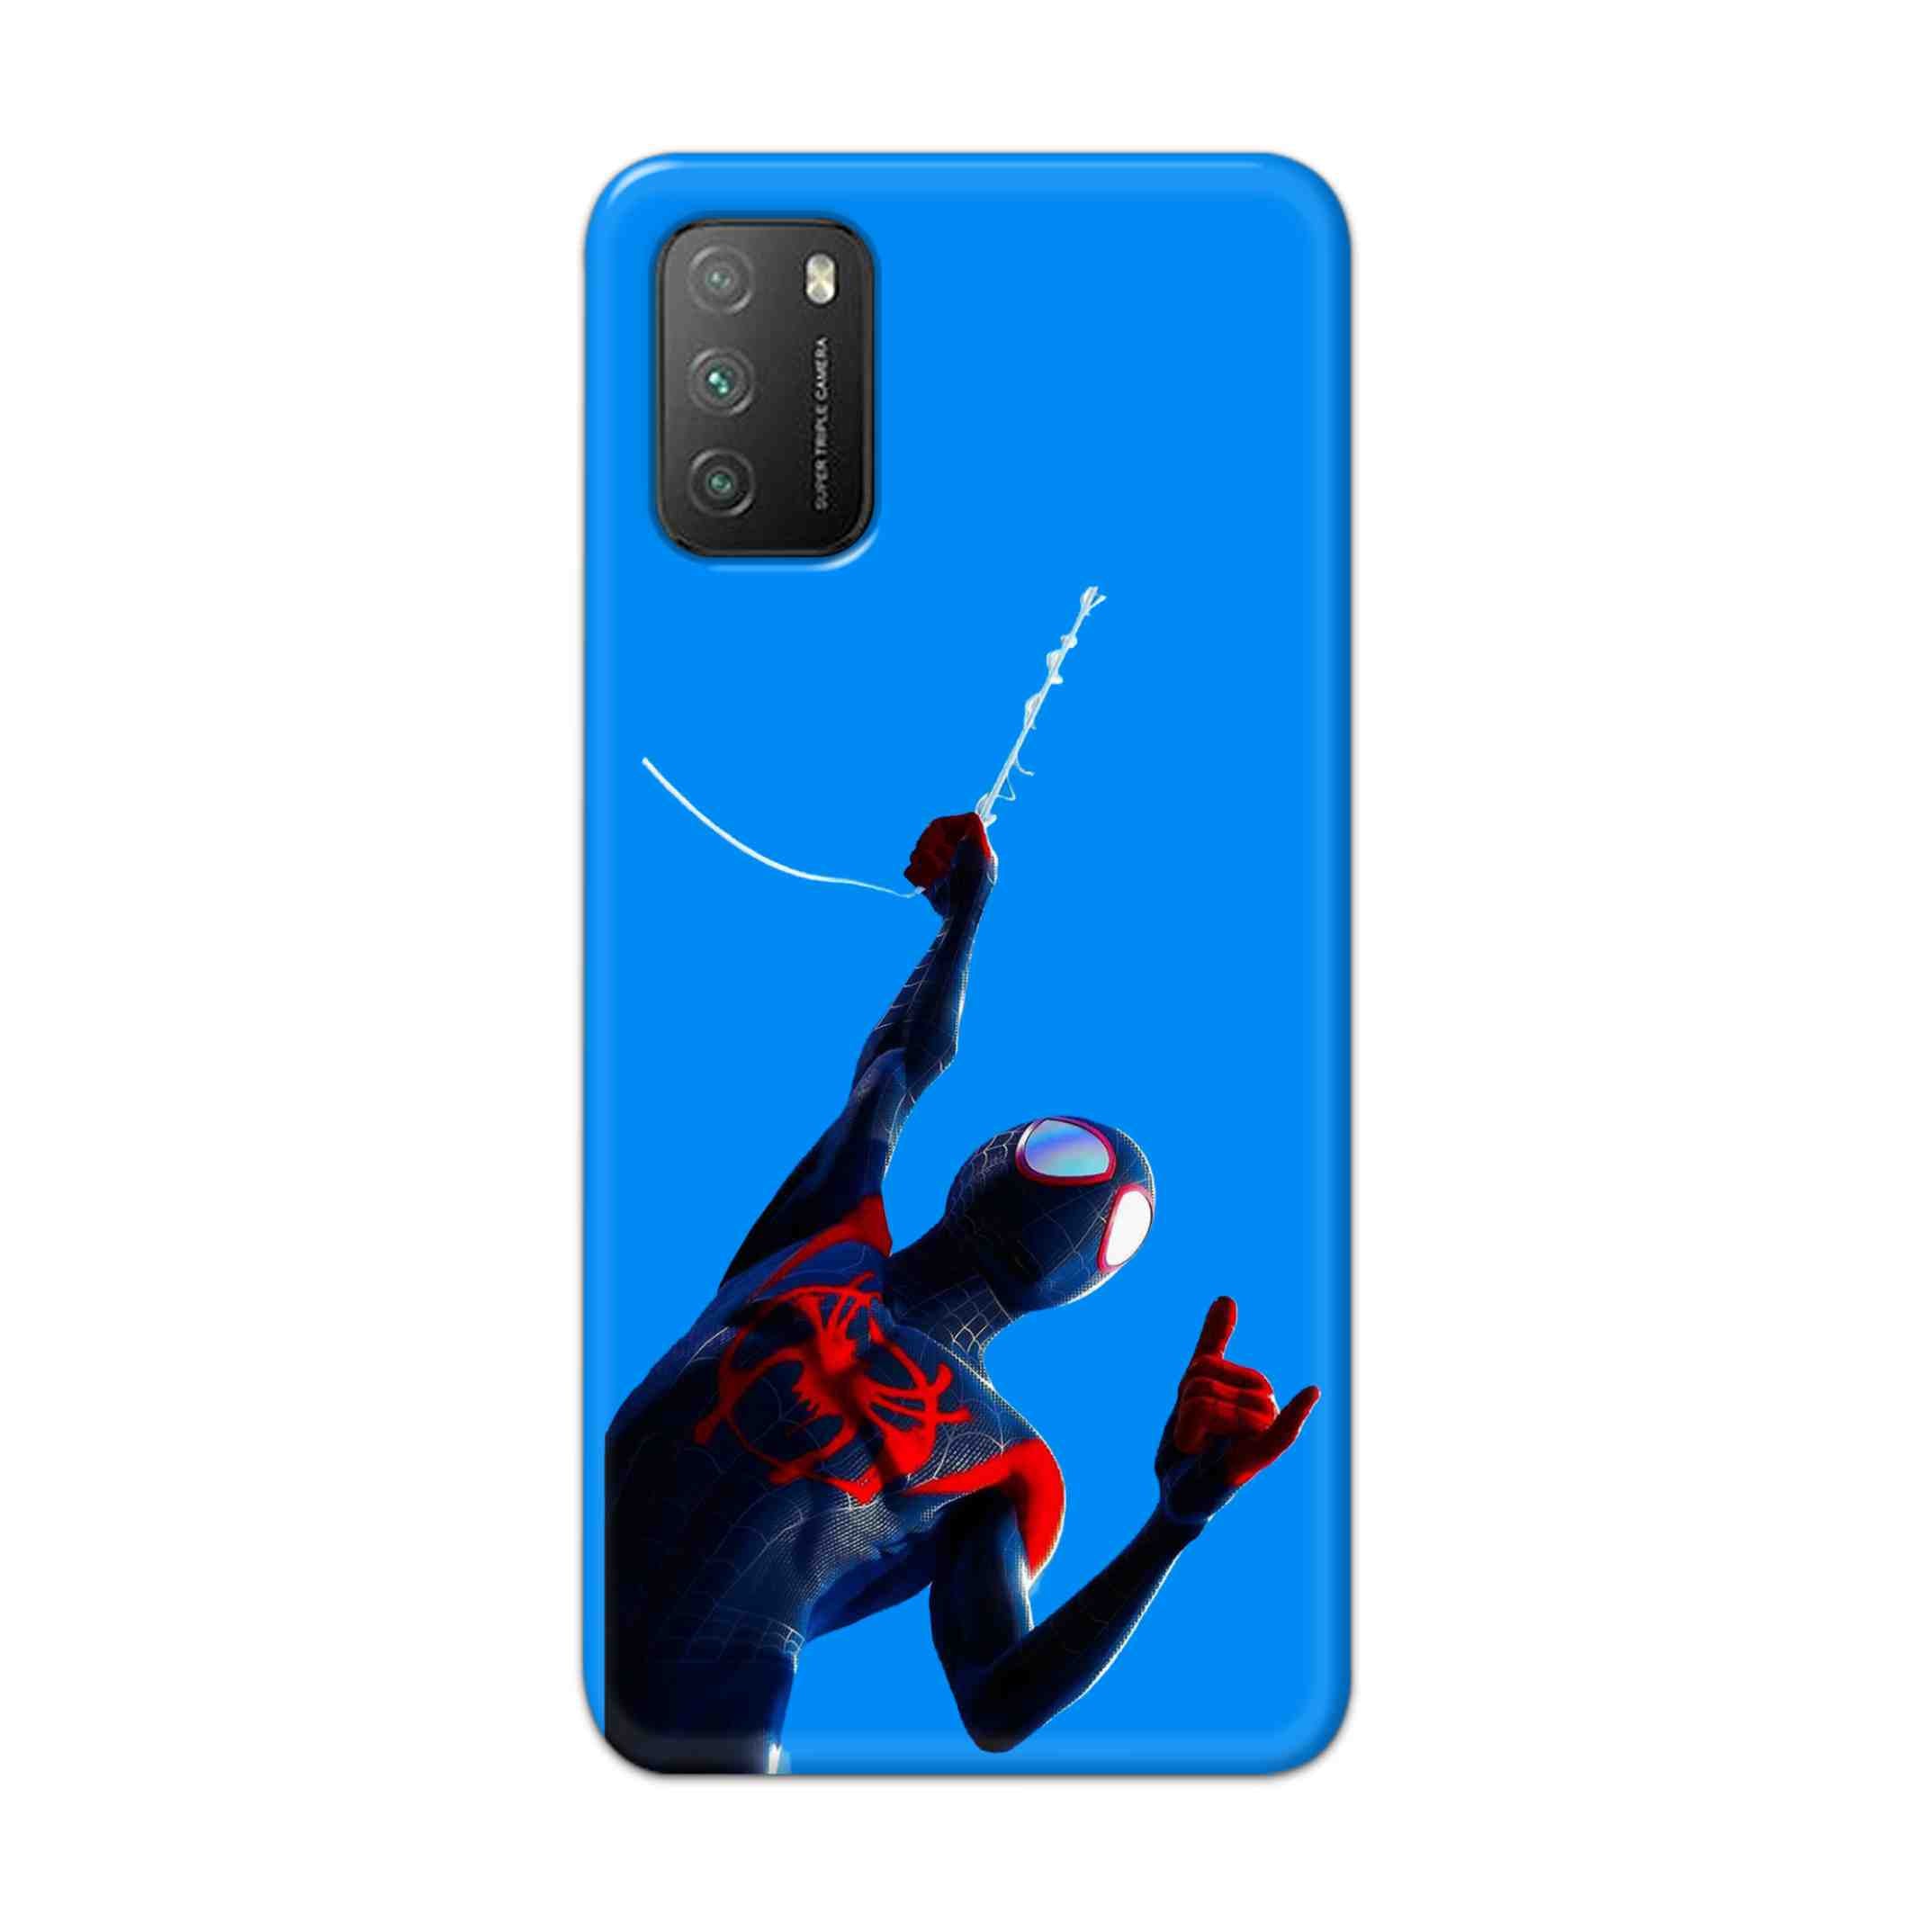 Buy Miles Morales Spiderman Hard Back Mobile Phone Case Cover For Poco M3 Online